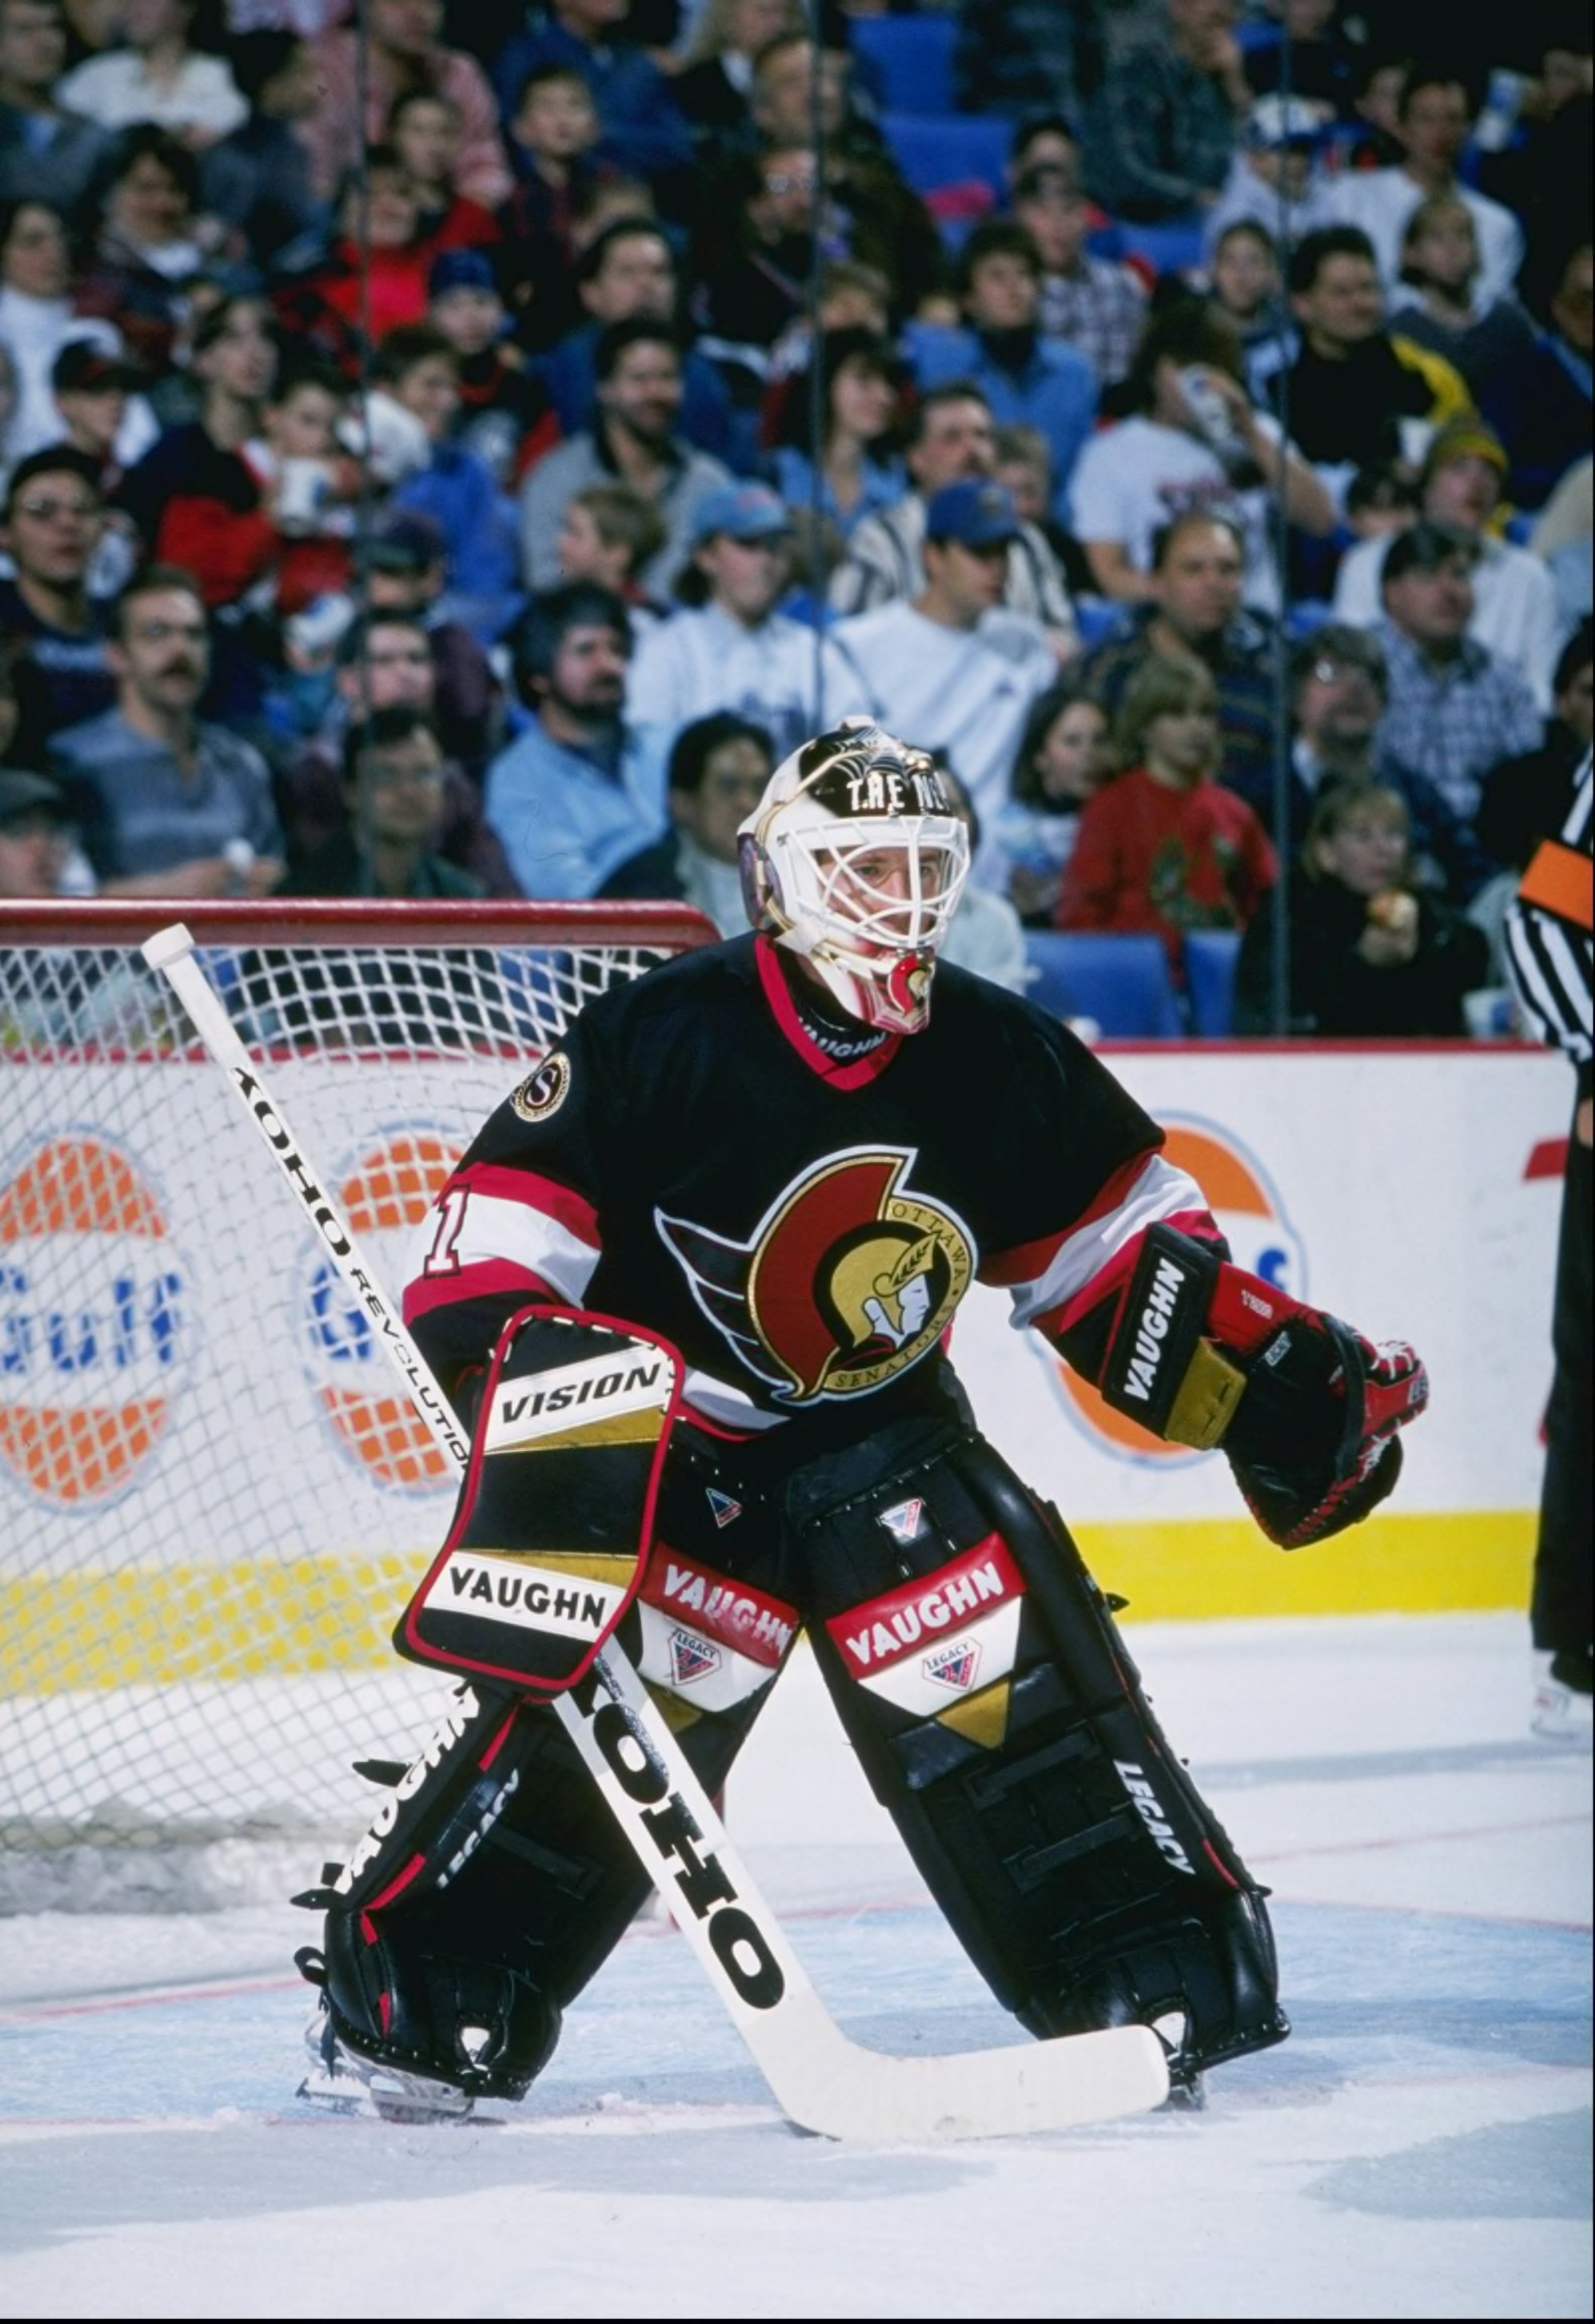 Ottawa Senators Vintage Daniel Alfredsson Koho Hockey Jersey Made In C